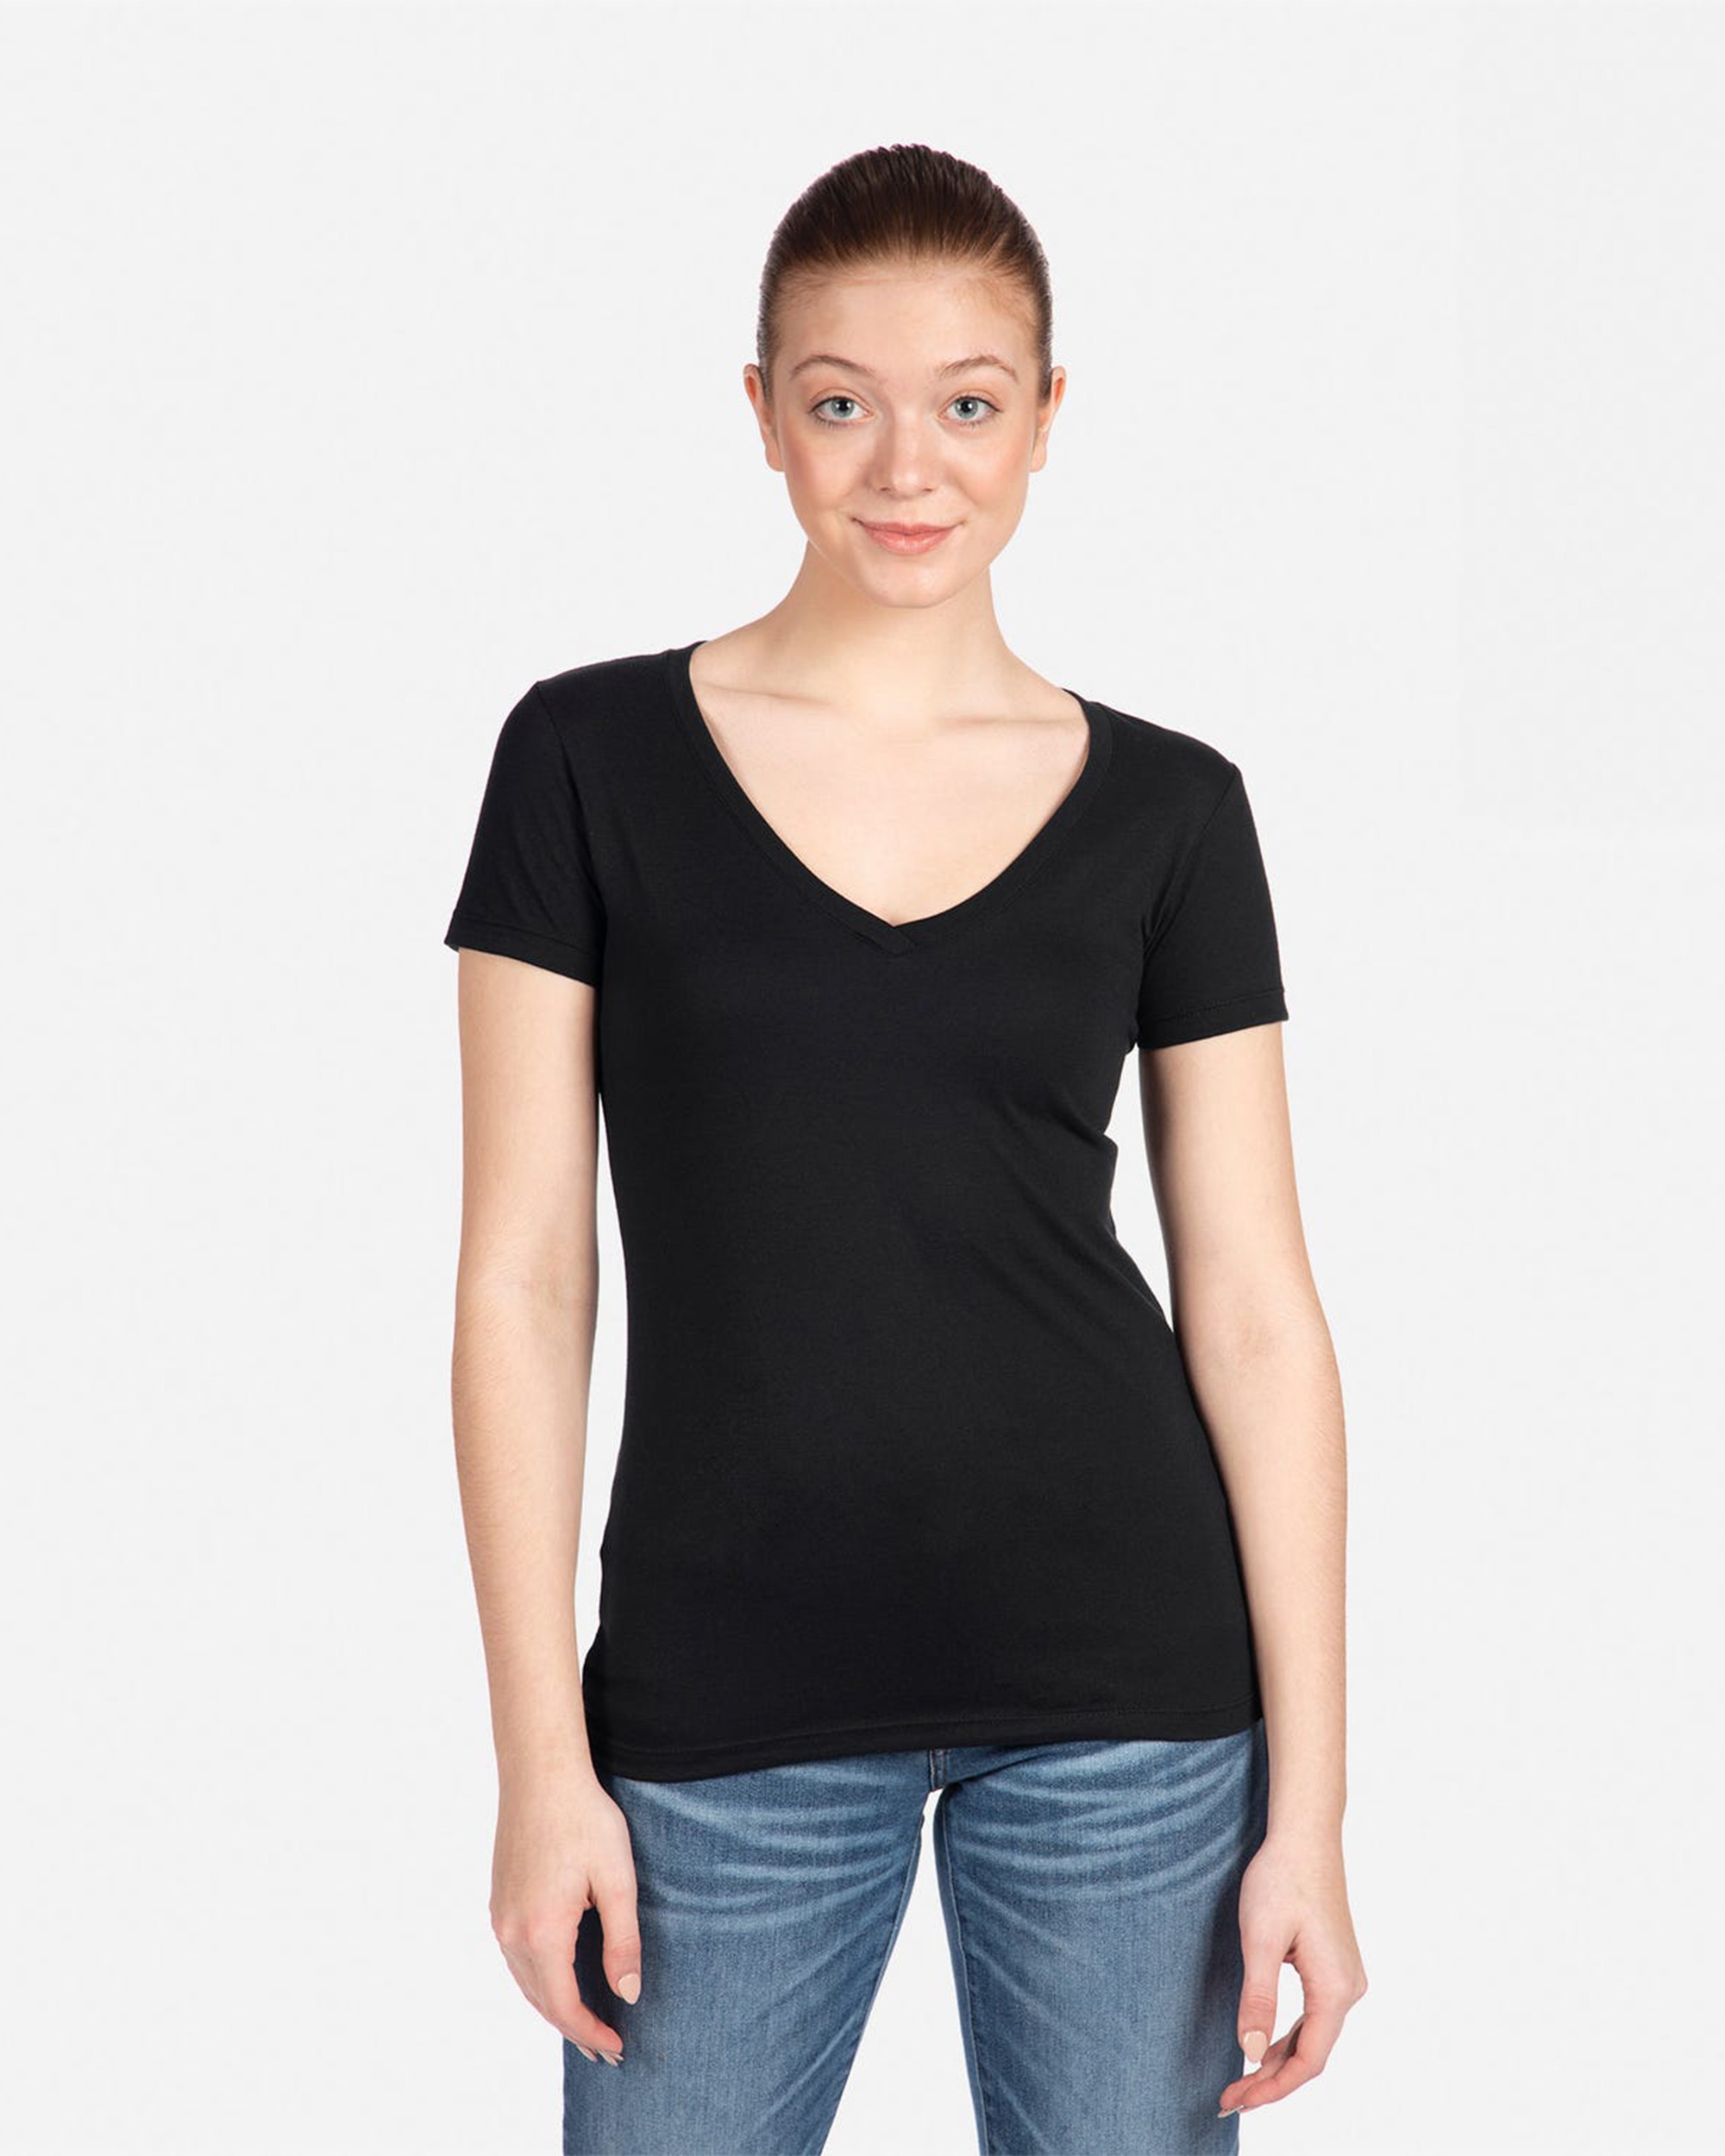 Next Level Apparel® 1540 Women's Ideal V-Neck T-Shirt